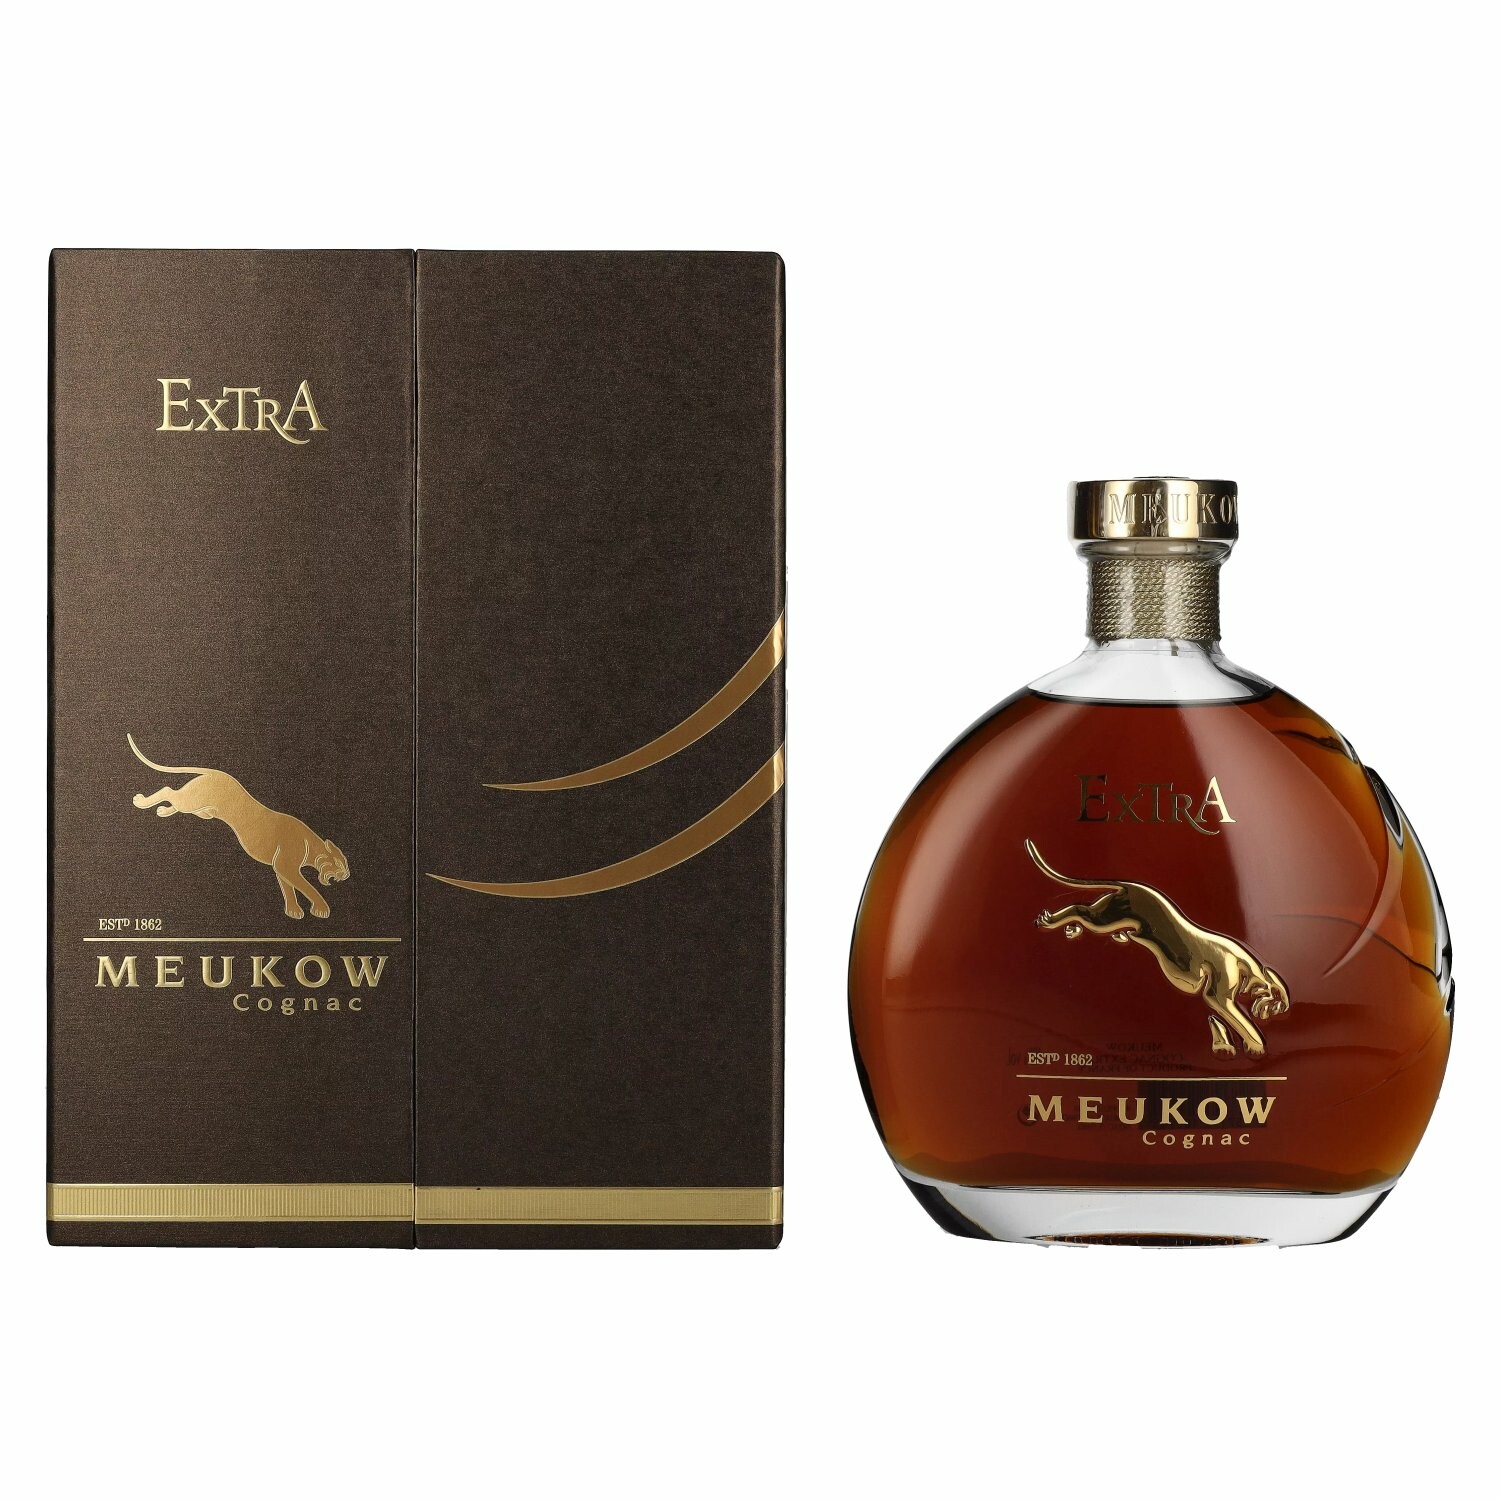 Meukow EXTRA Cognac 40% Vol. 0,7l in Giftbox